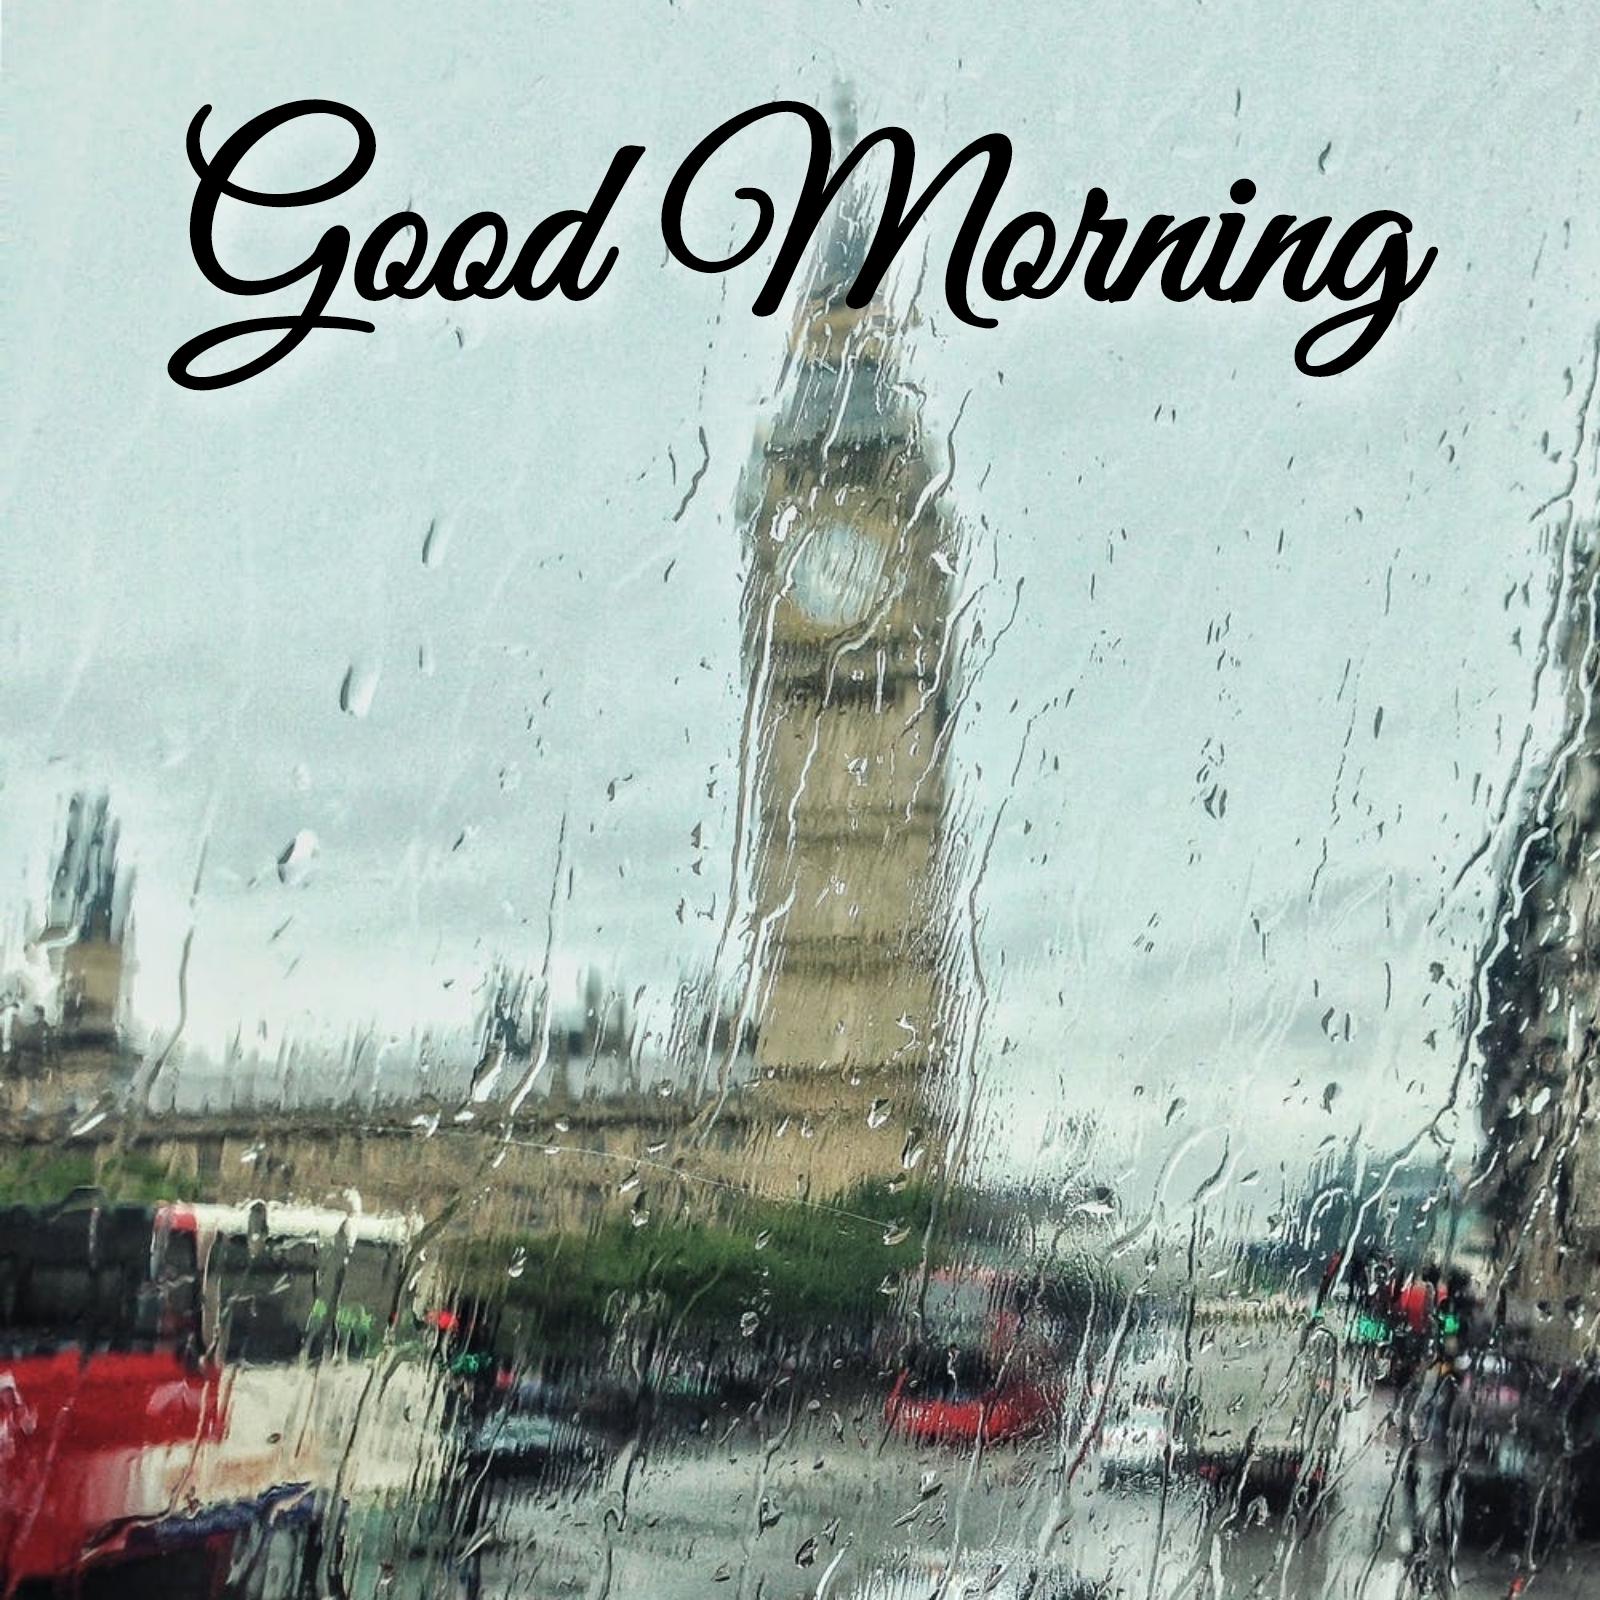 Good Morning Images Rainy Season